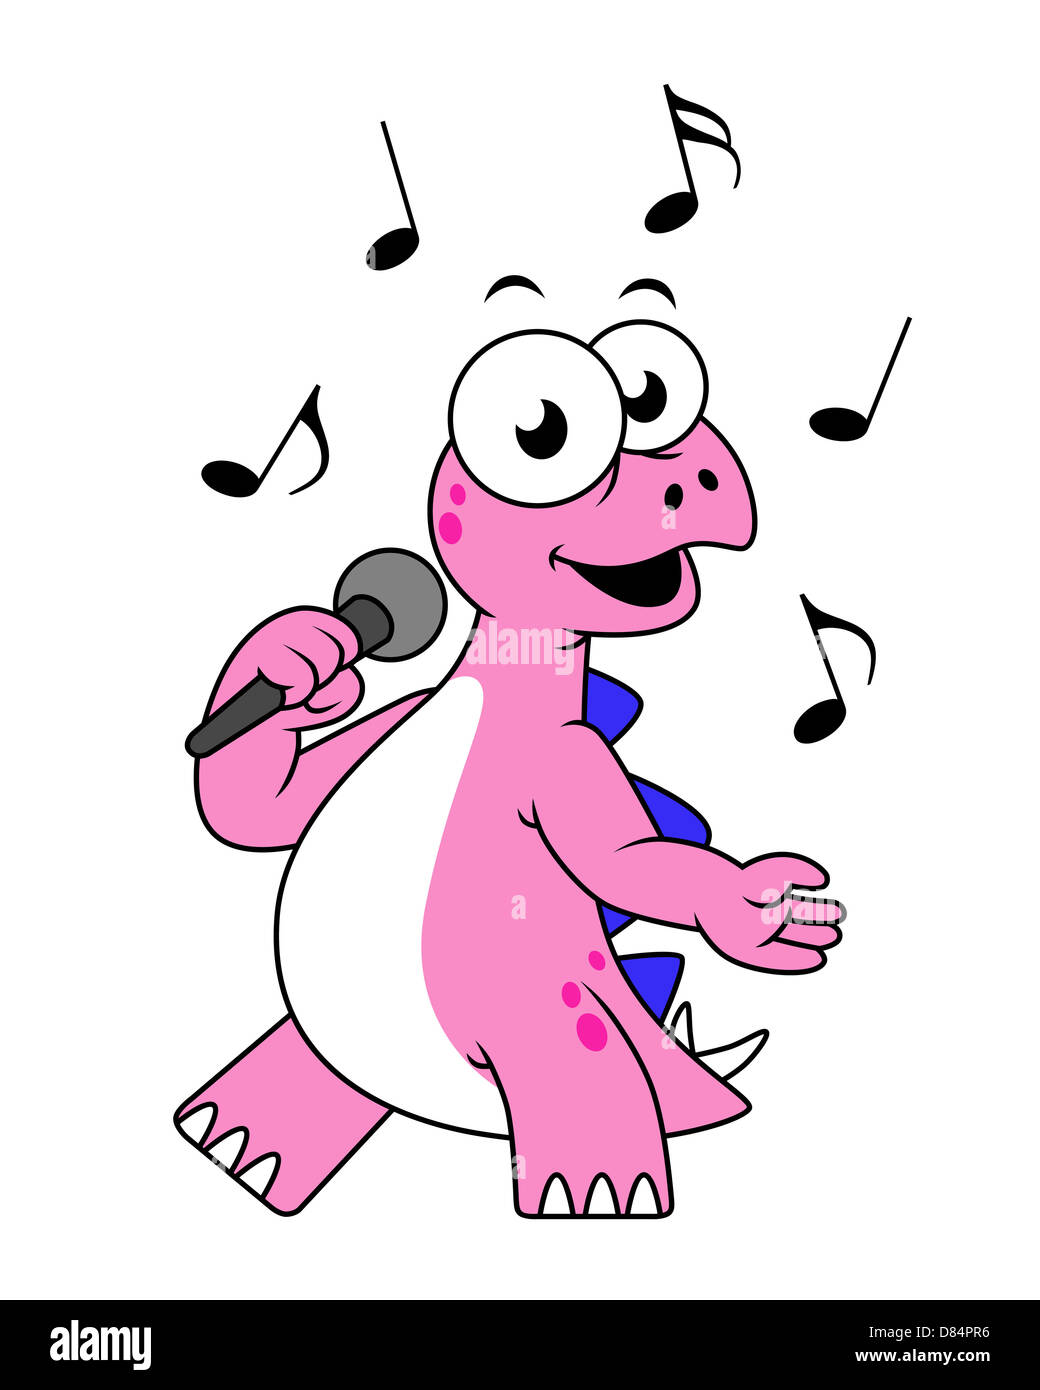 Illustration of a singing Stegosaurus. Stock Photo